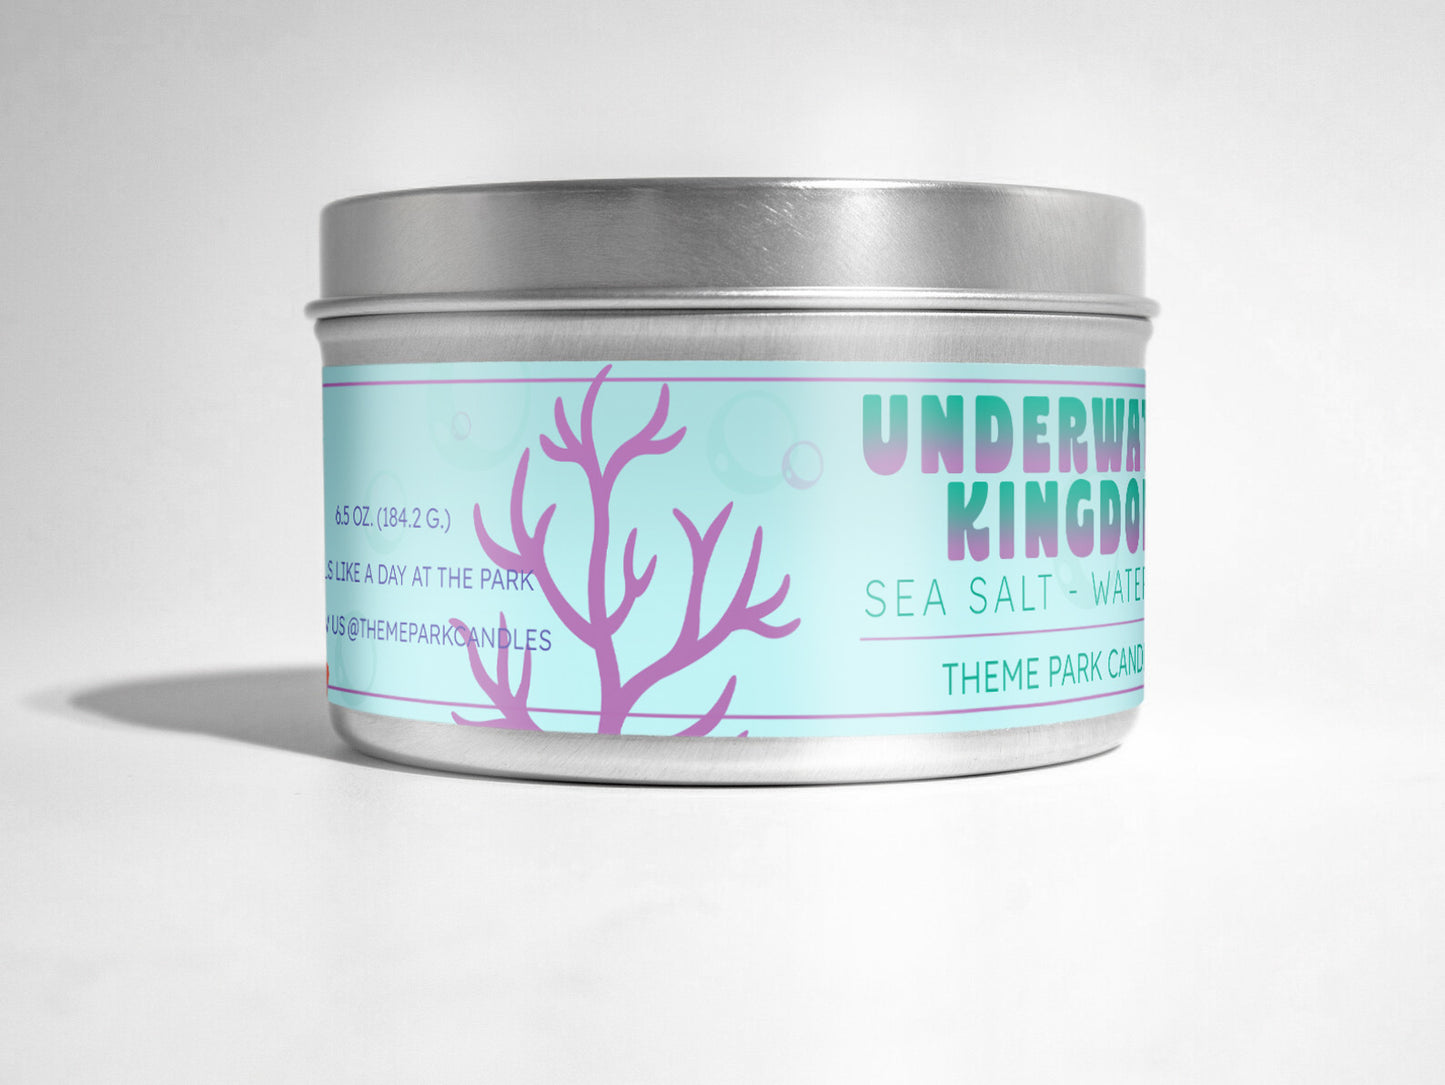 Underwater Kingdom Candle